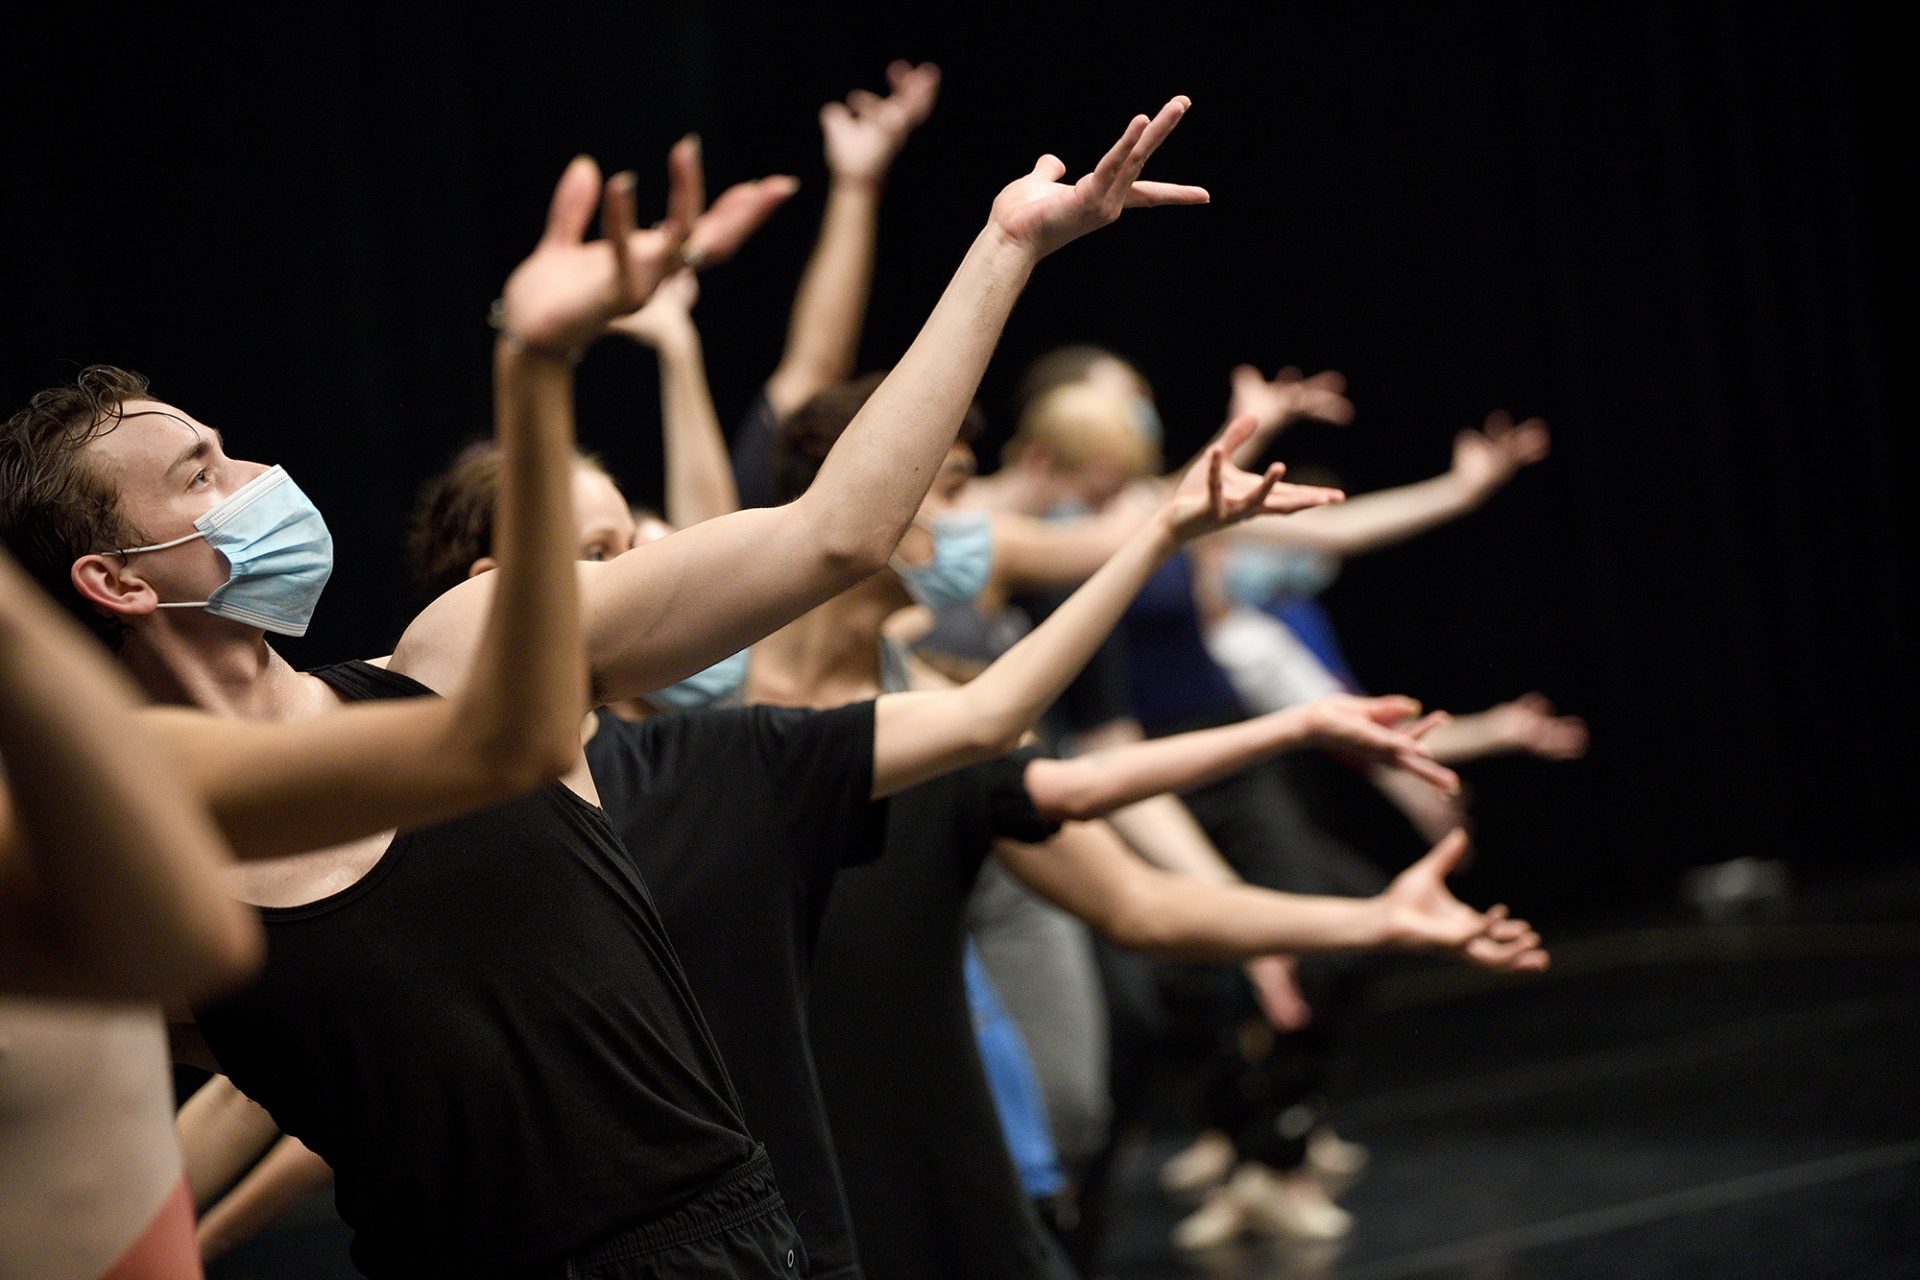 English-National-Ballet-dancers-in-rehearsal-for-Creature-by-Akram-Khan-©-Laurent-Liotardo-2000x1333